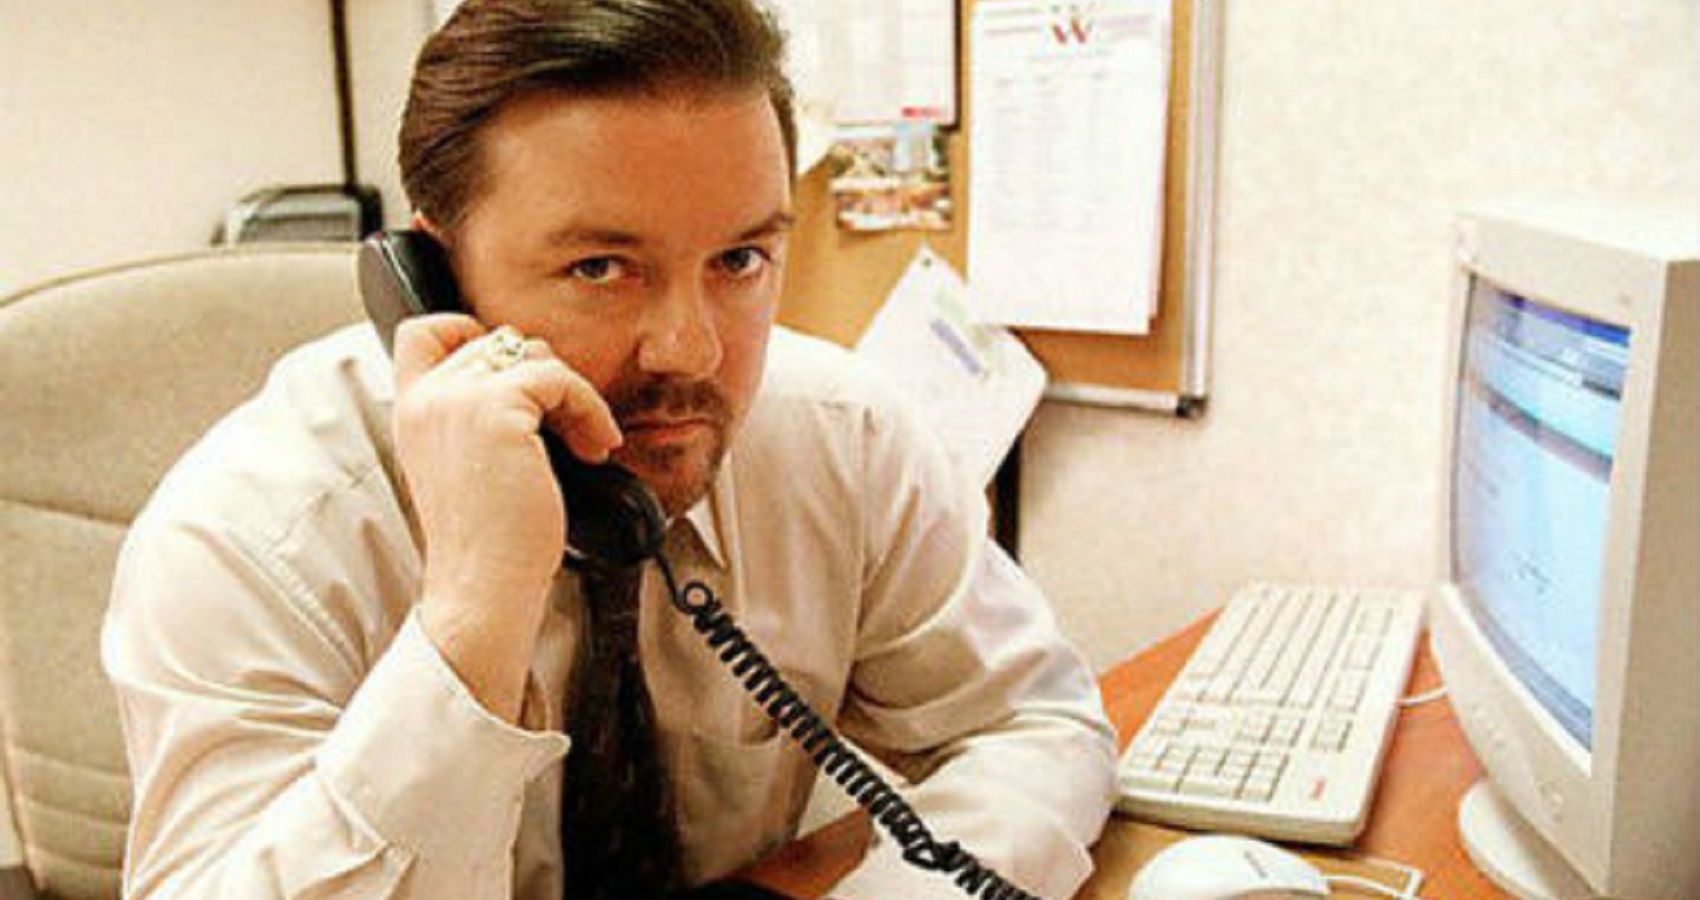 Ricky Gervais on the phone